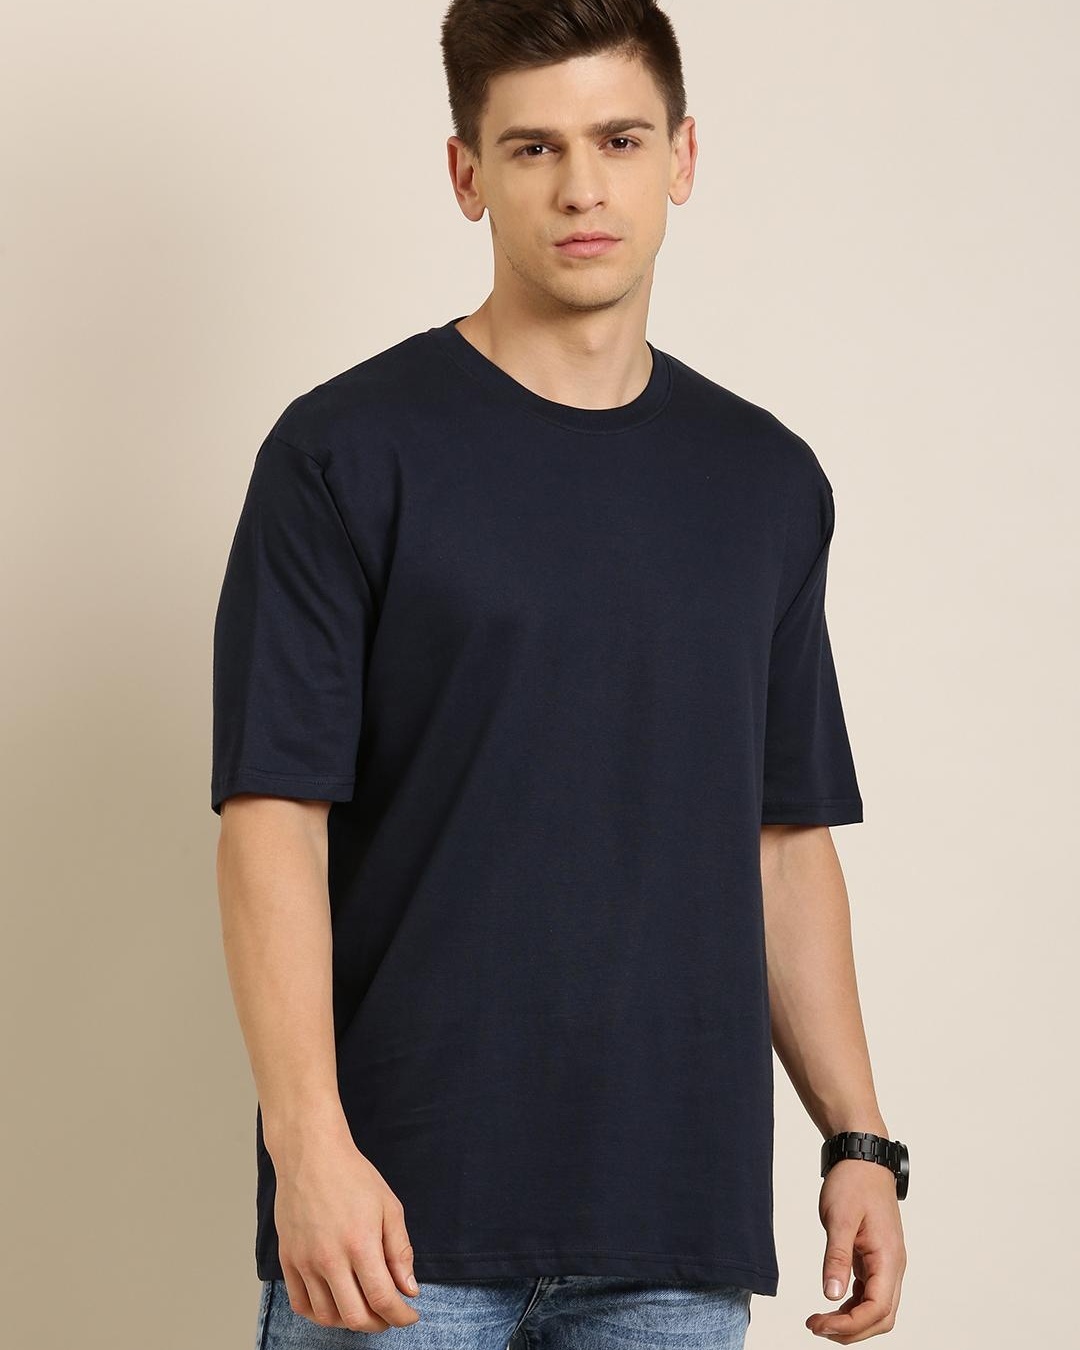 Buy Men's Blue Oversized T-shirt Online at Bewakoof